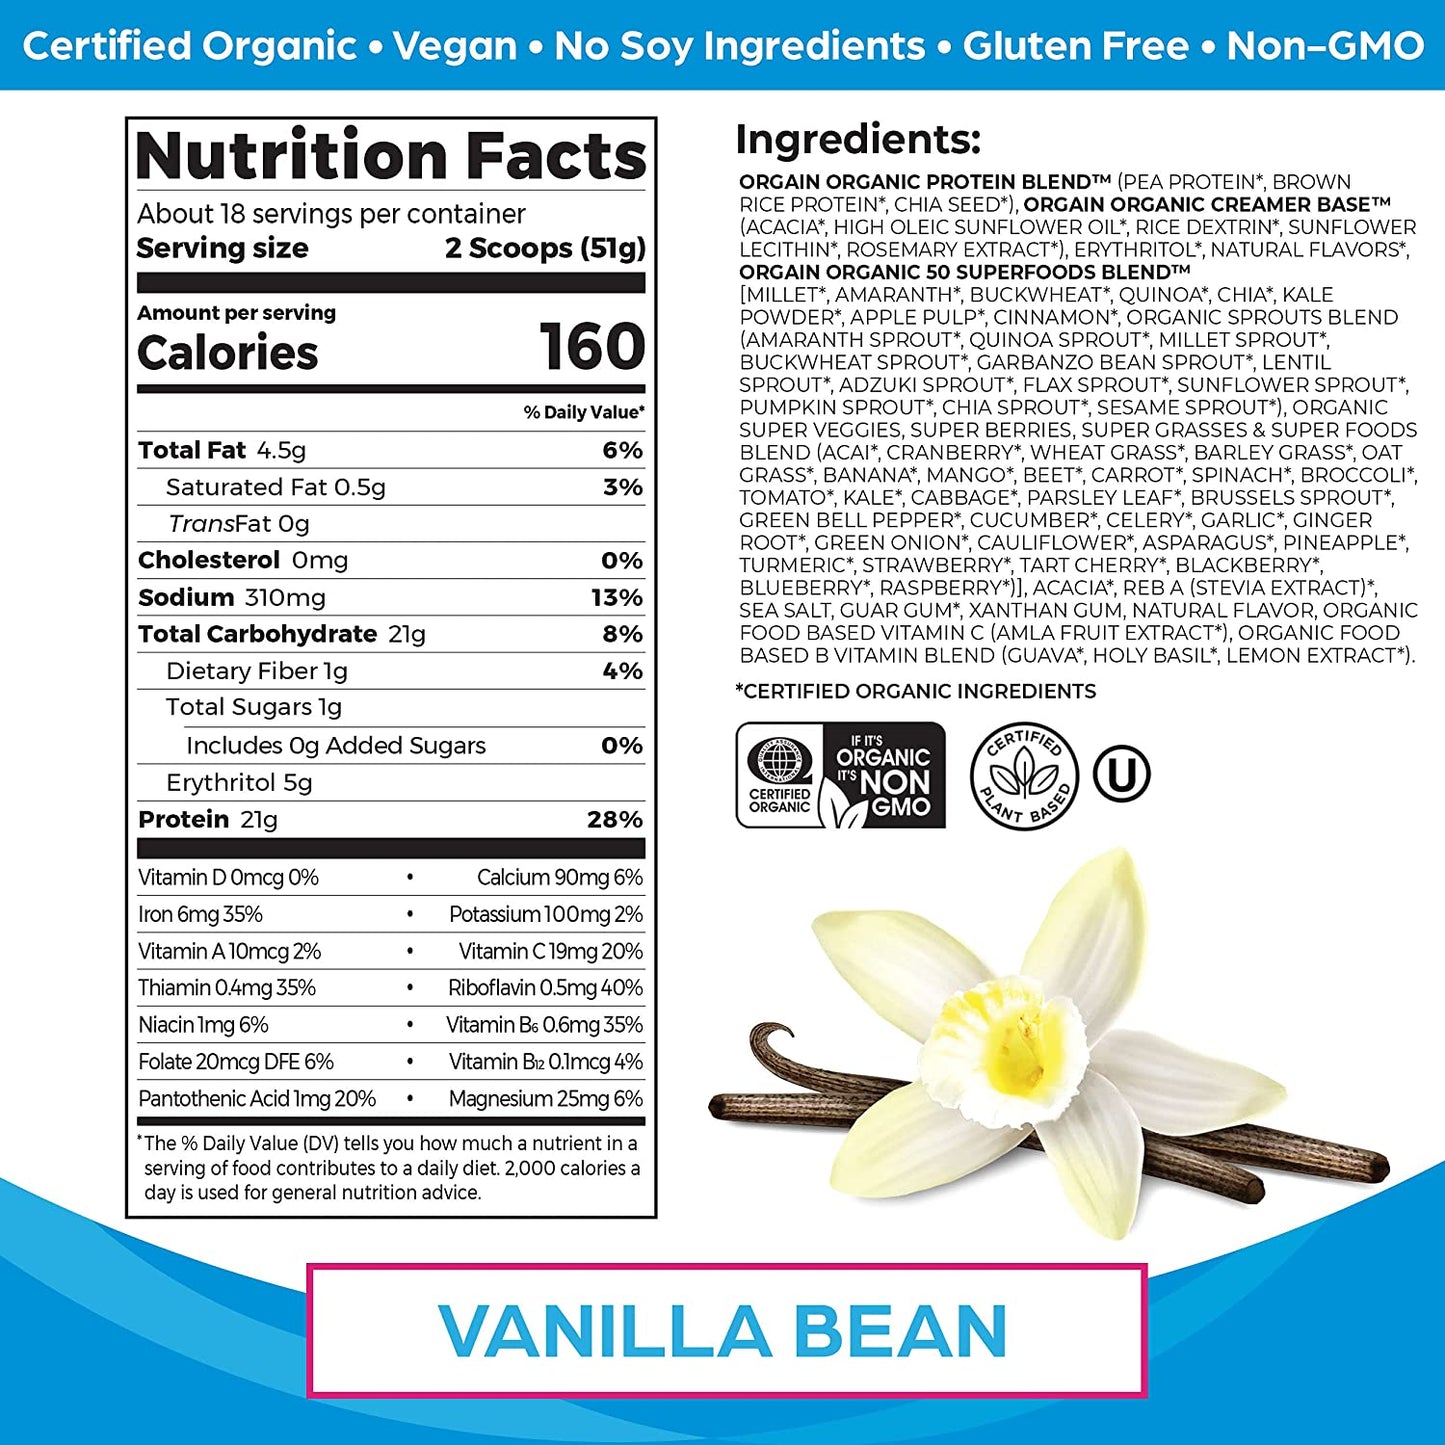 Orgain Plant Based Protein & Superfoods Vanilla Bean